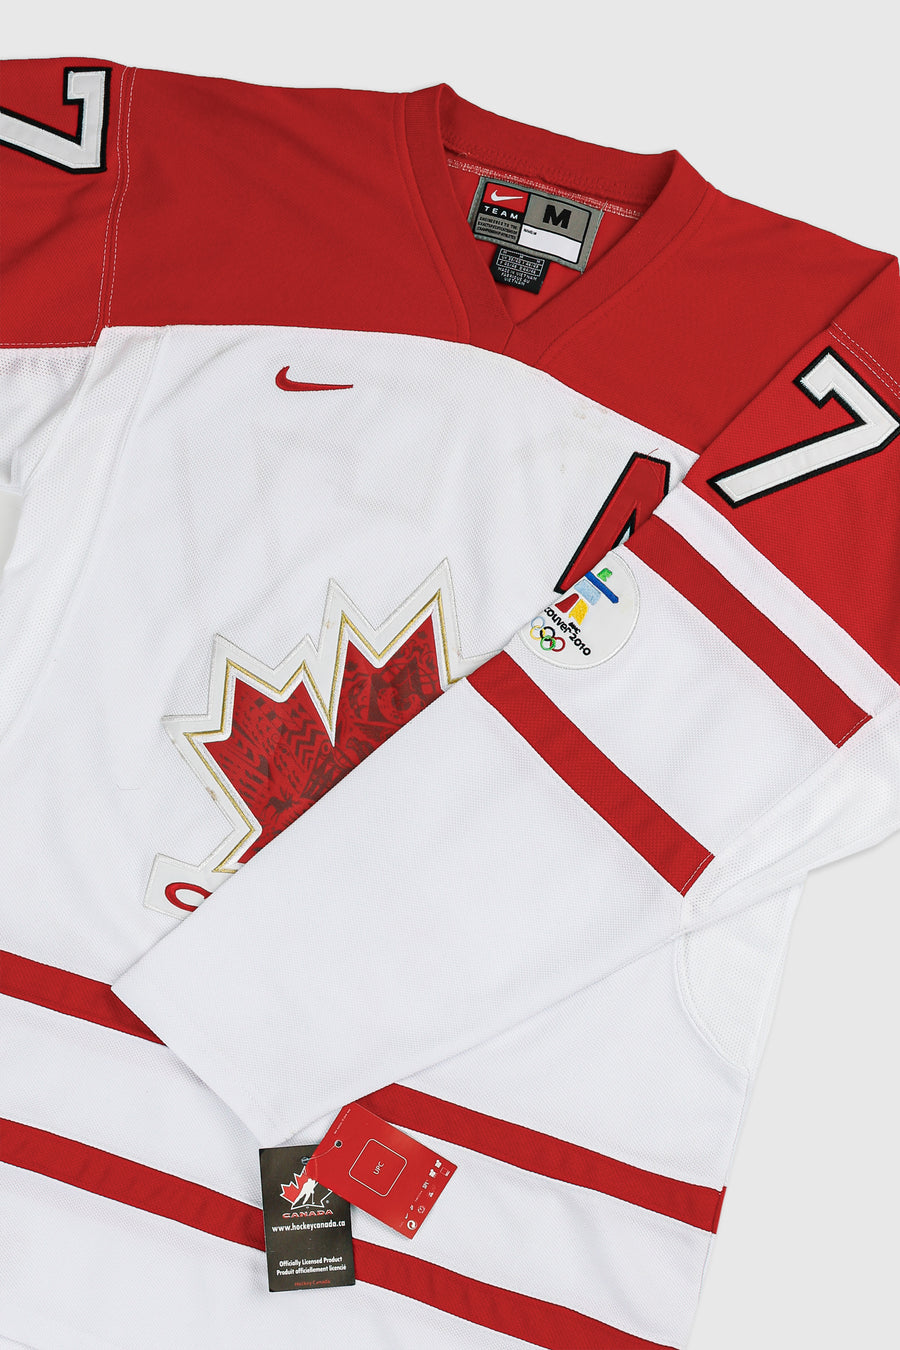 Vintage Team Canada Hockey Jersey - M